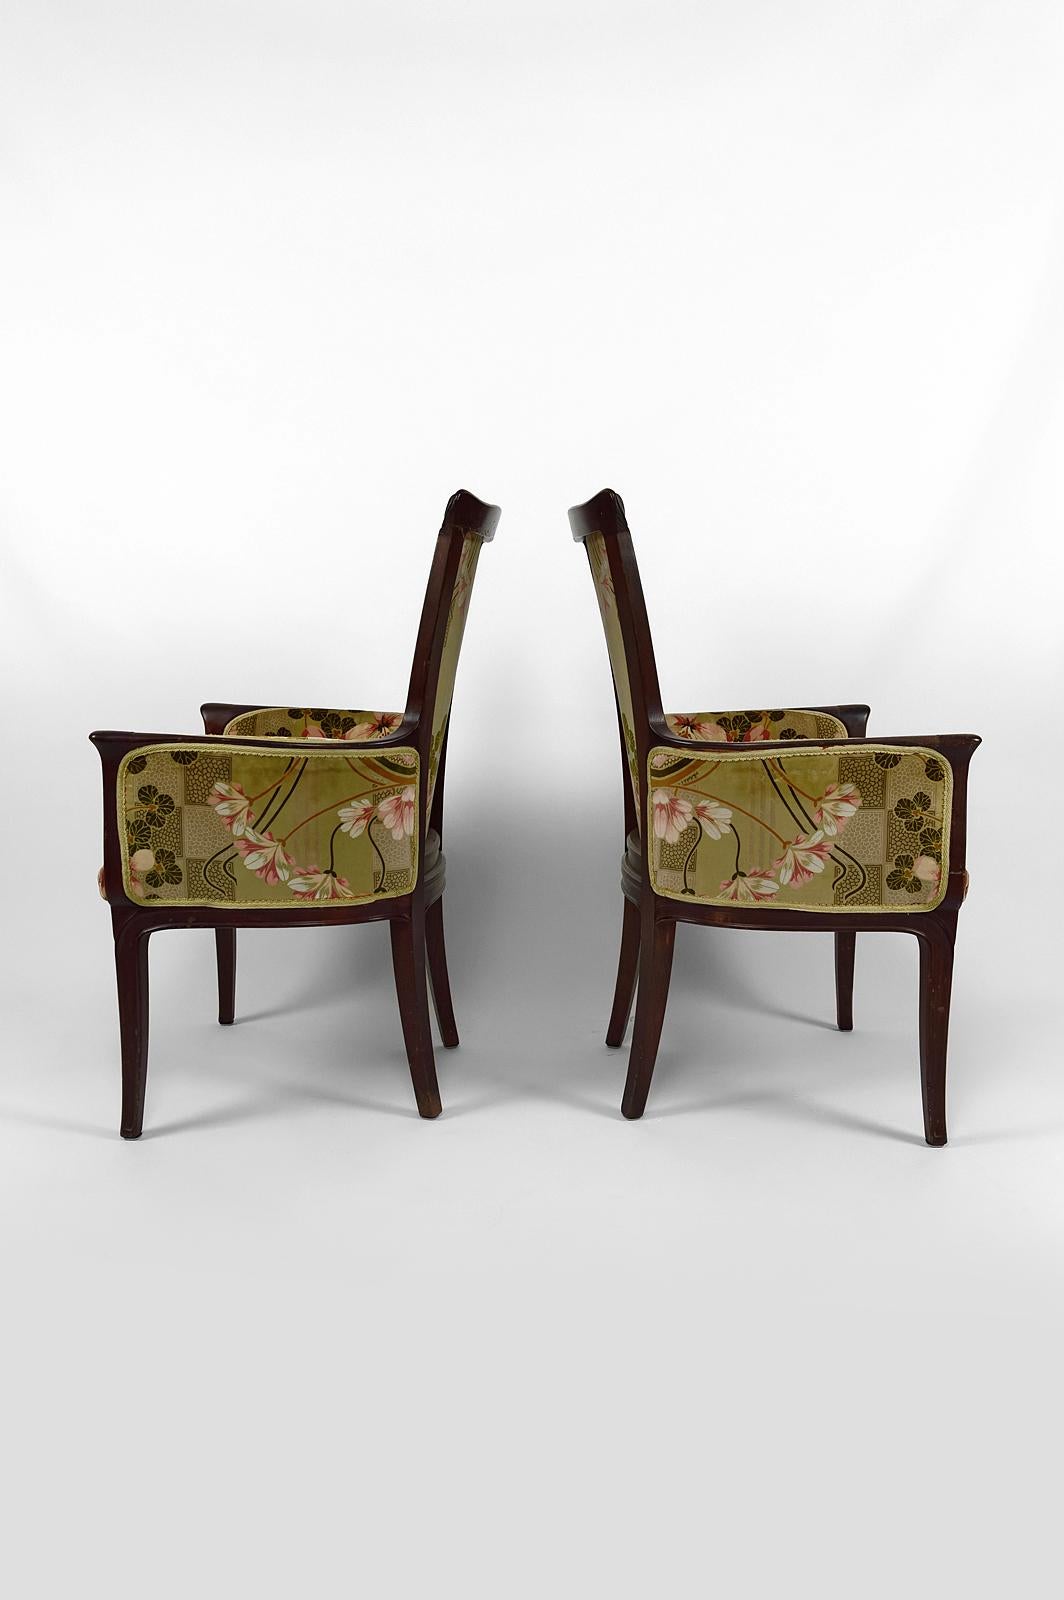 Art Nouveau salon set of 3, 2 armchairs and 1 chair, France, Circa 1900 For Sale 2